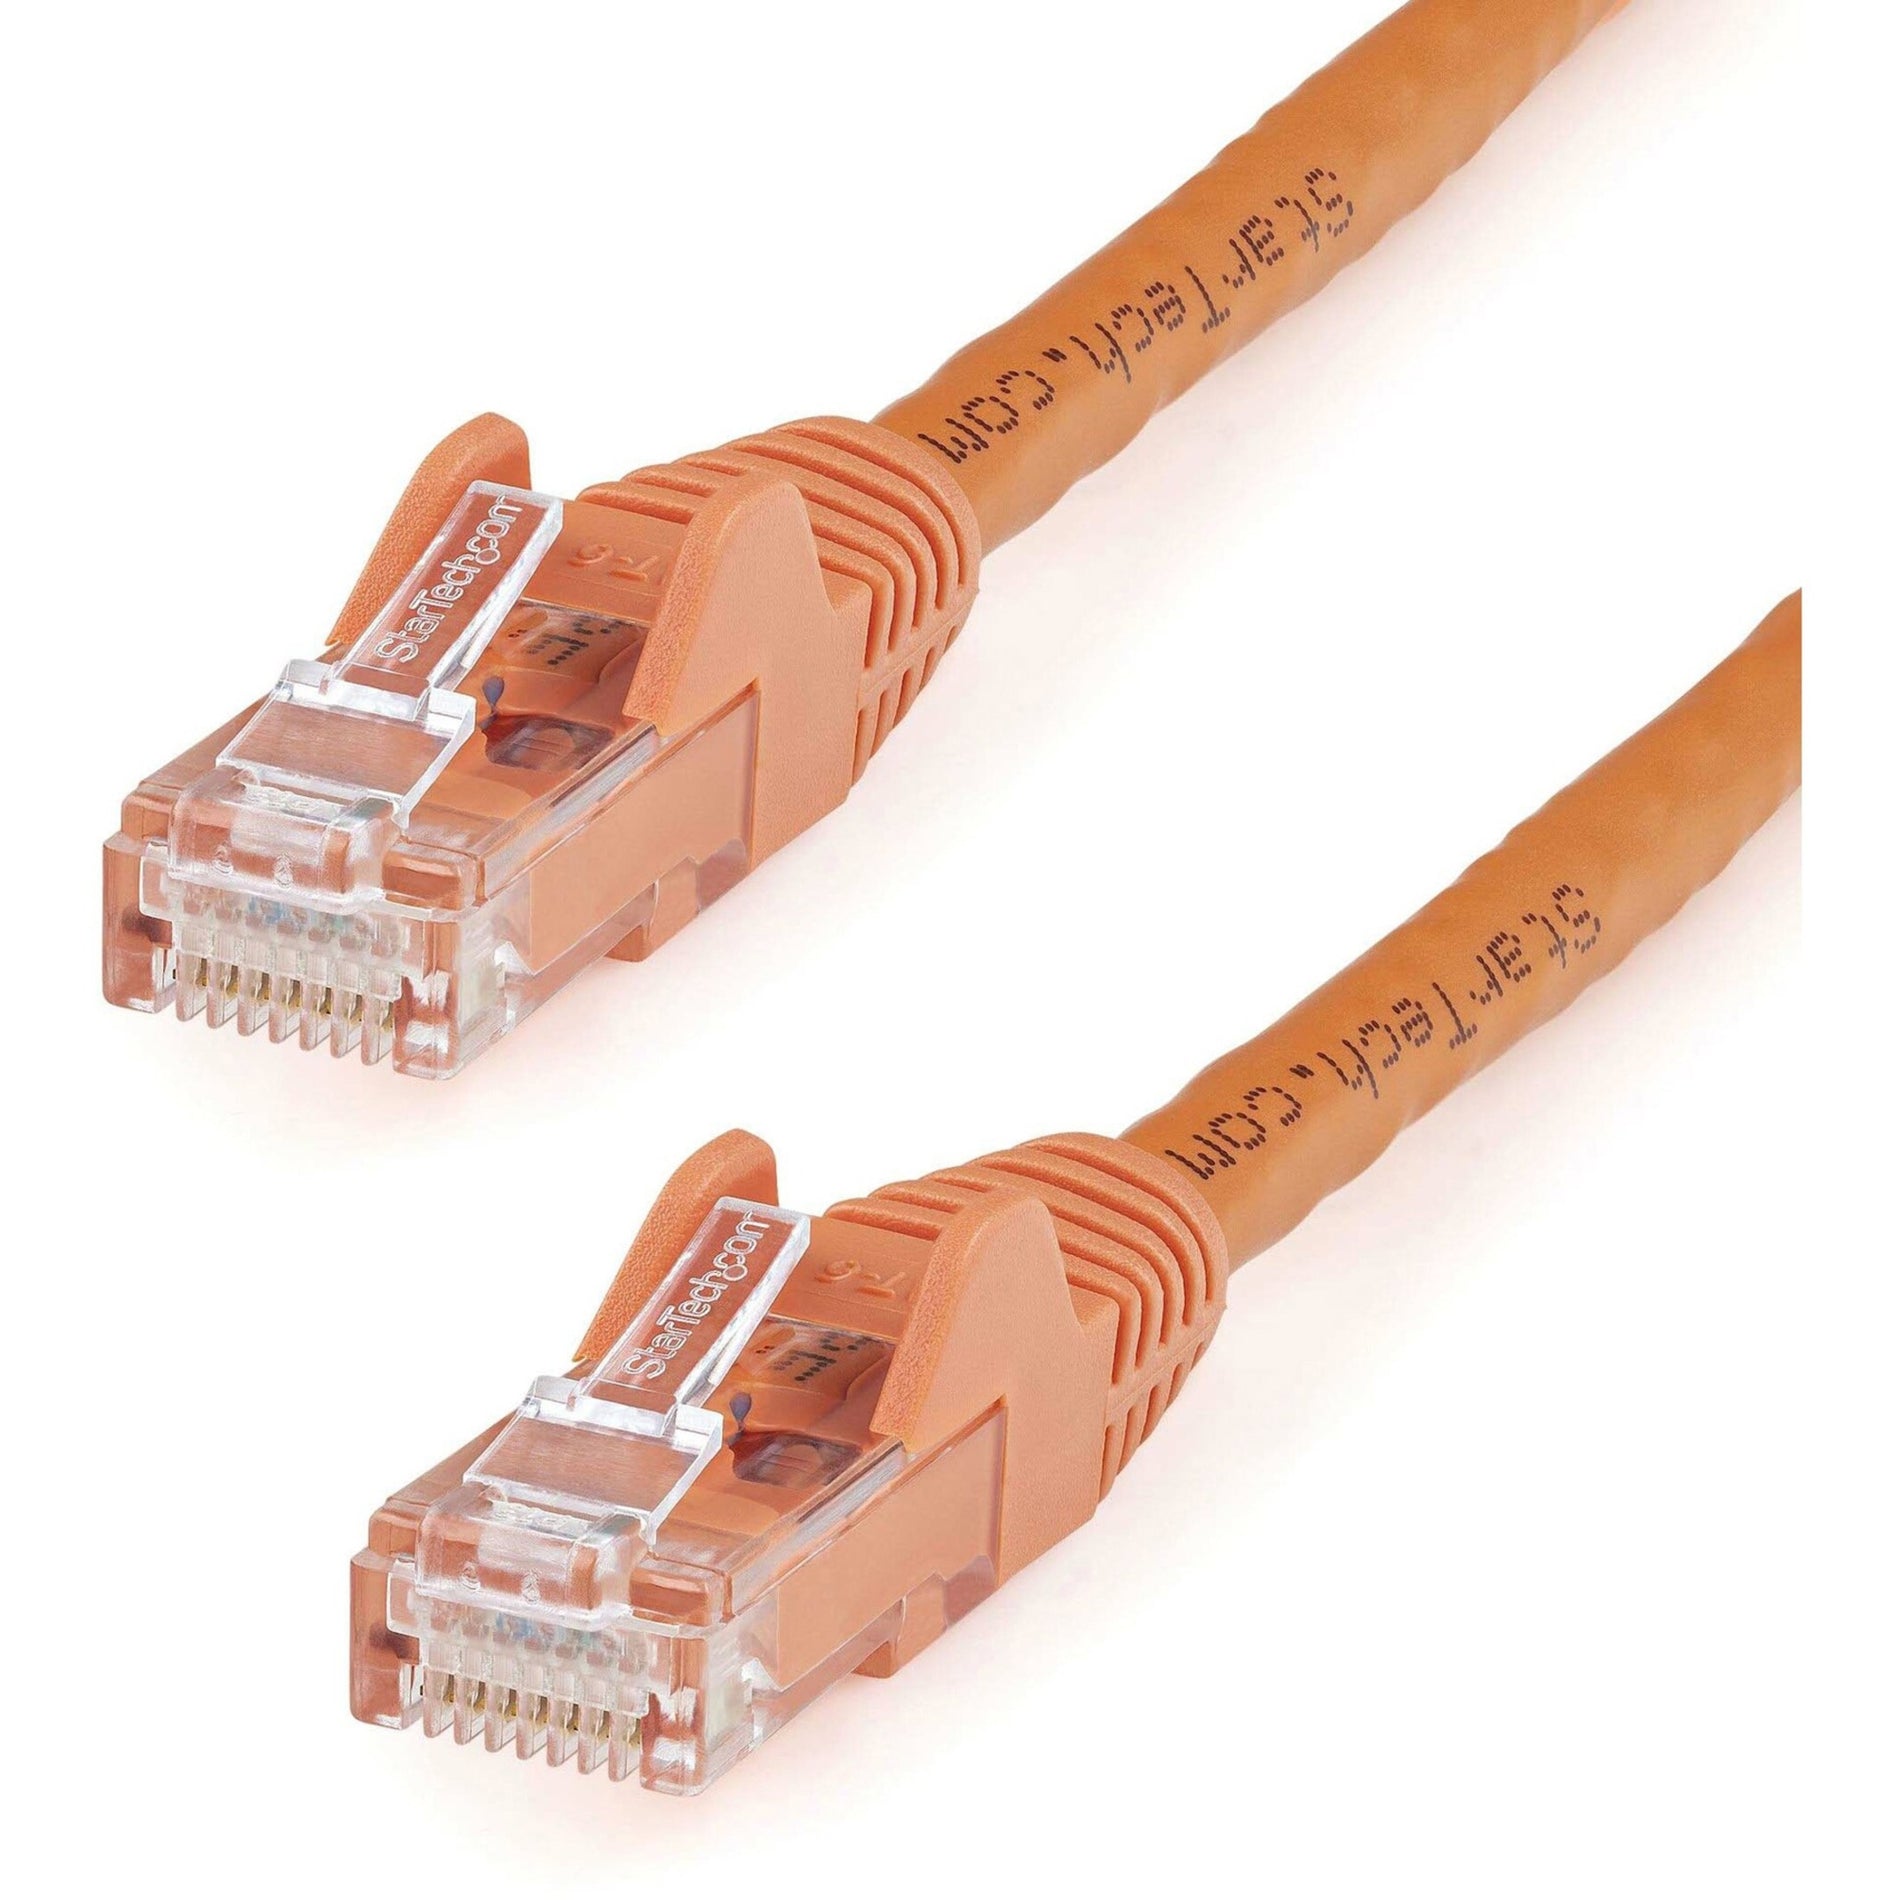 StarTech.com N6PATCH9OR Cat6 Patch Cable, 9 ft Orange Ethernet Cable, Snagless RJ45 Connectors